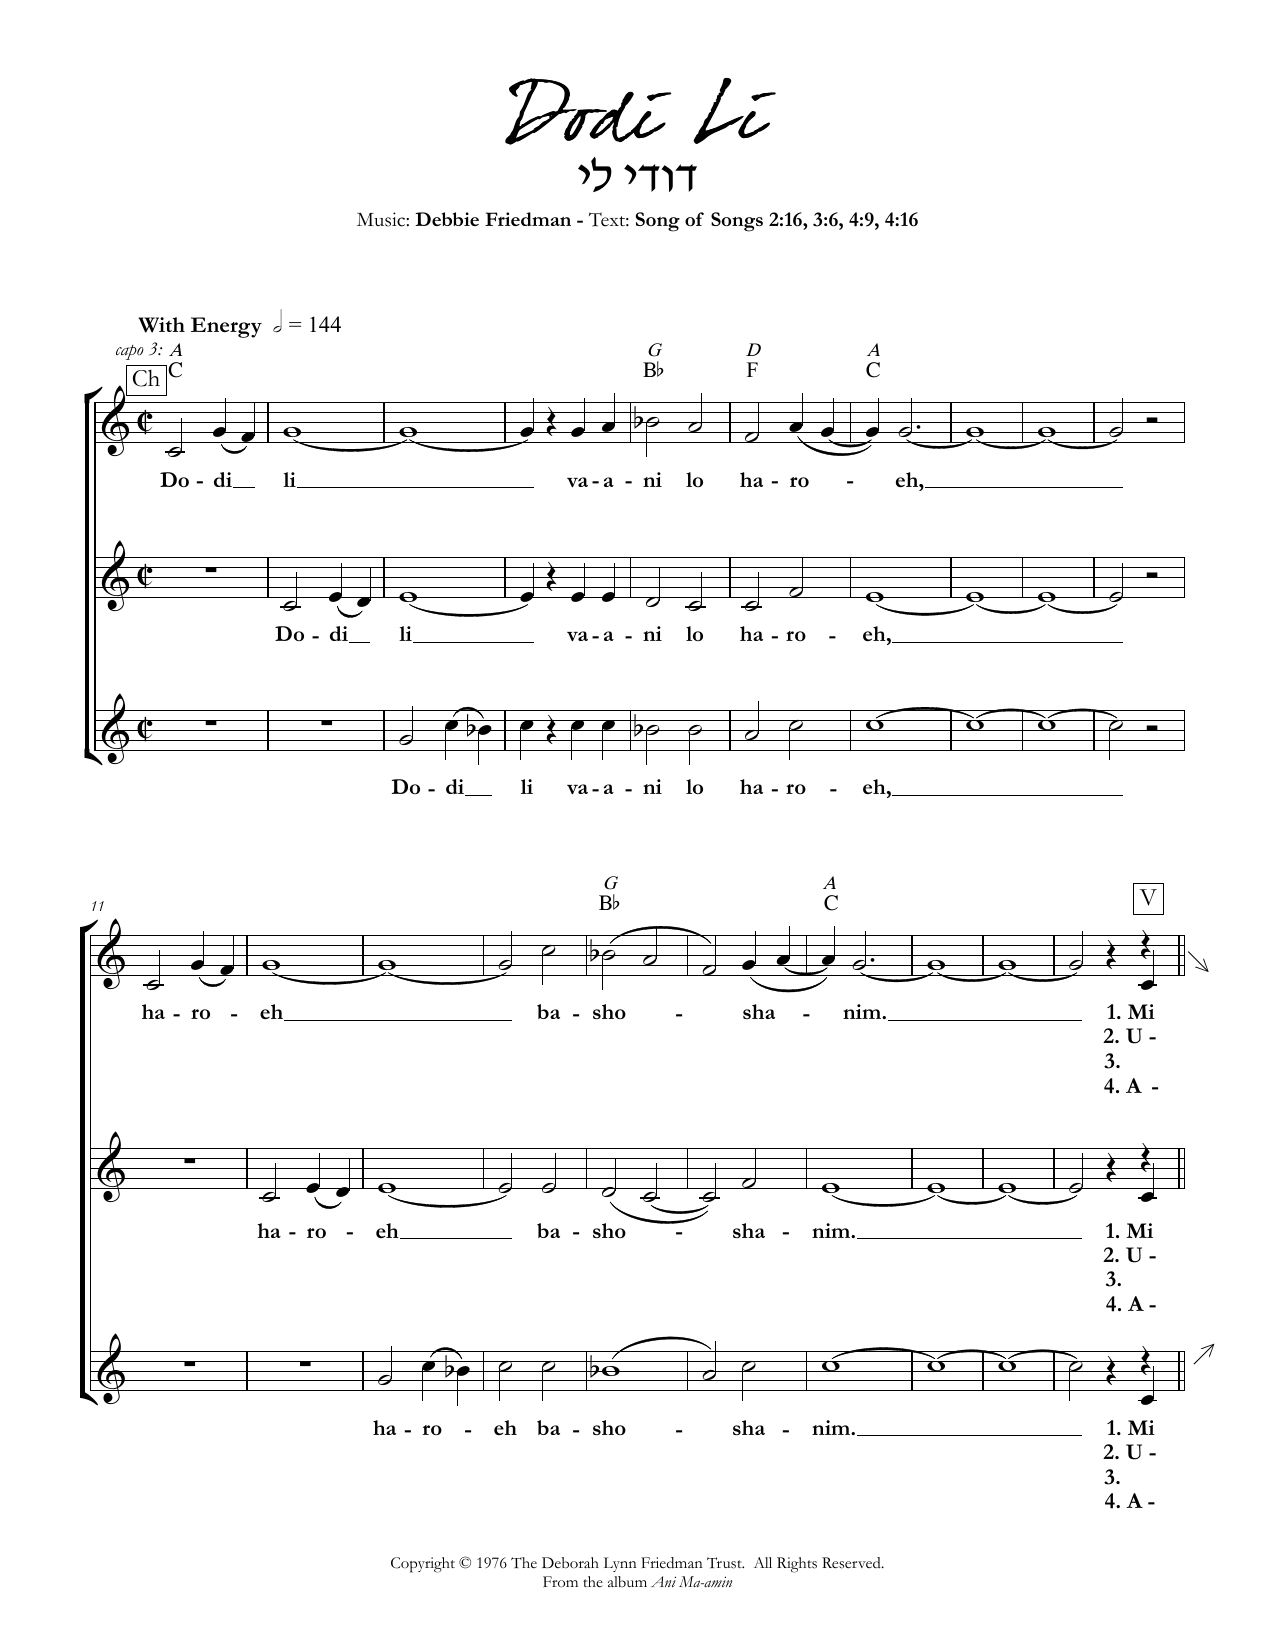 Debbie Friedman Dodi Li Sheet Music Notes & Chords for Lead Sheet / Fake Book - Download or Print PDF